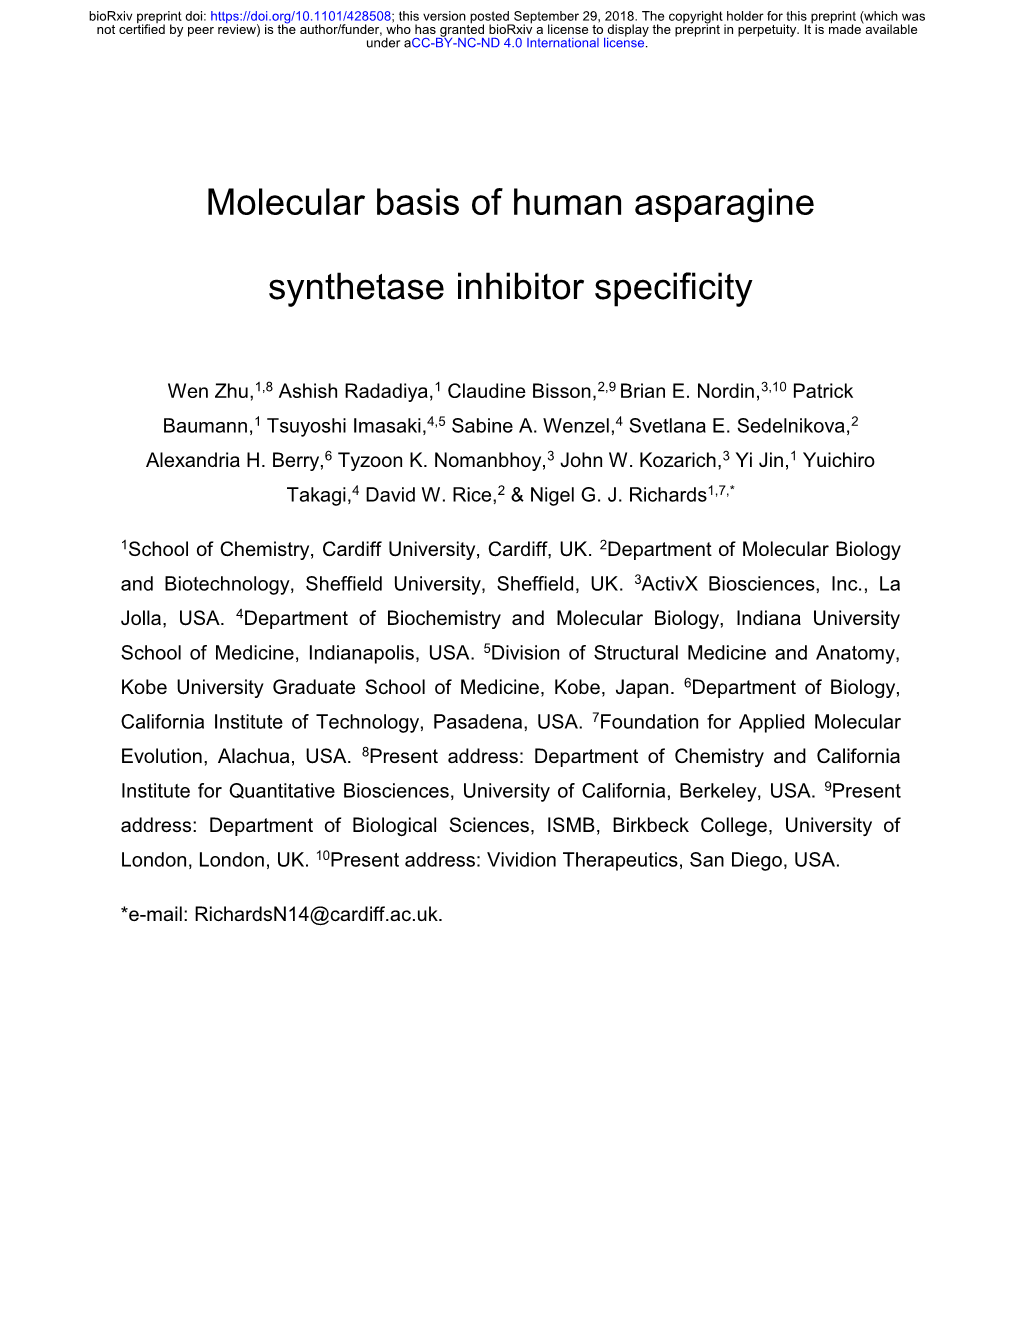 Molecular Basis of Human Asparagine Synthetase Inhibitor Specificity